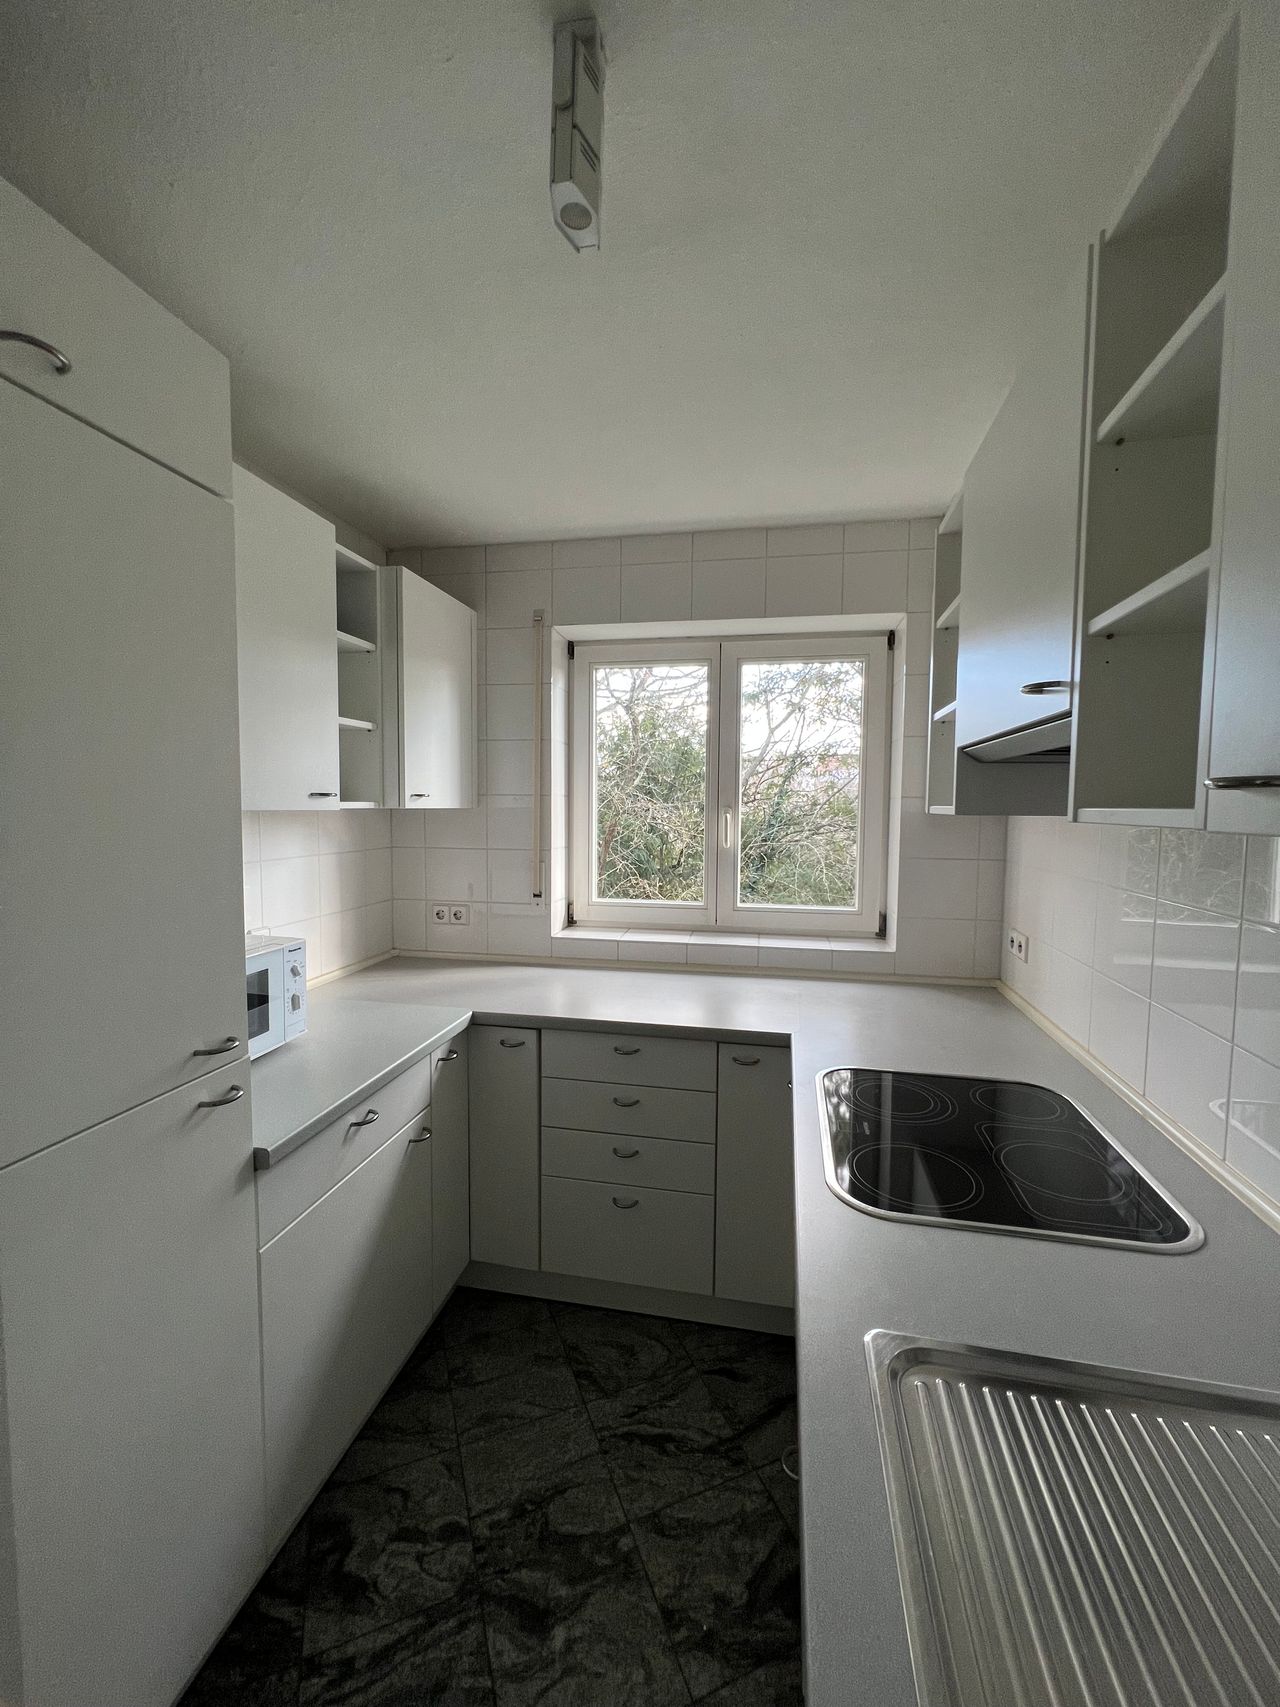 Killesberg - Kräherwald 3-room apartment in an exclusive panoramic location